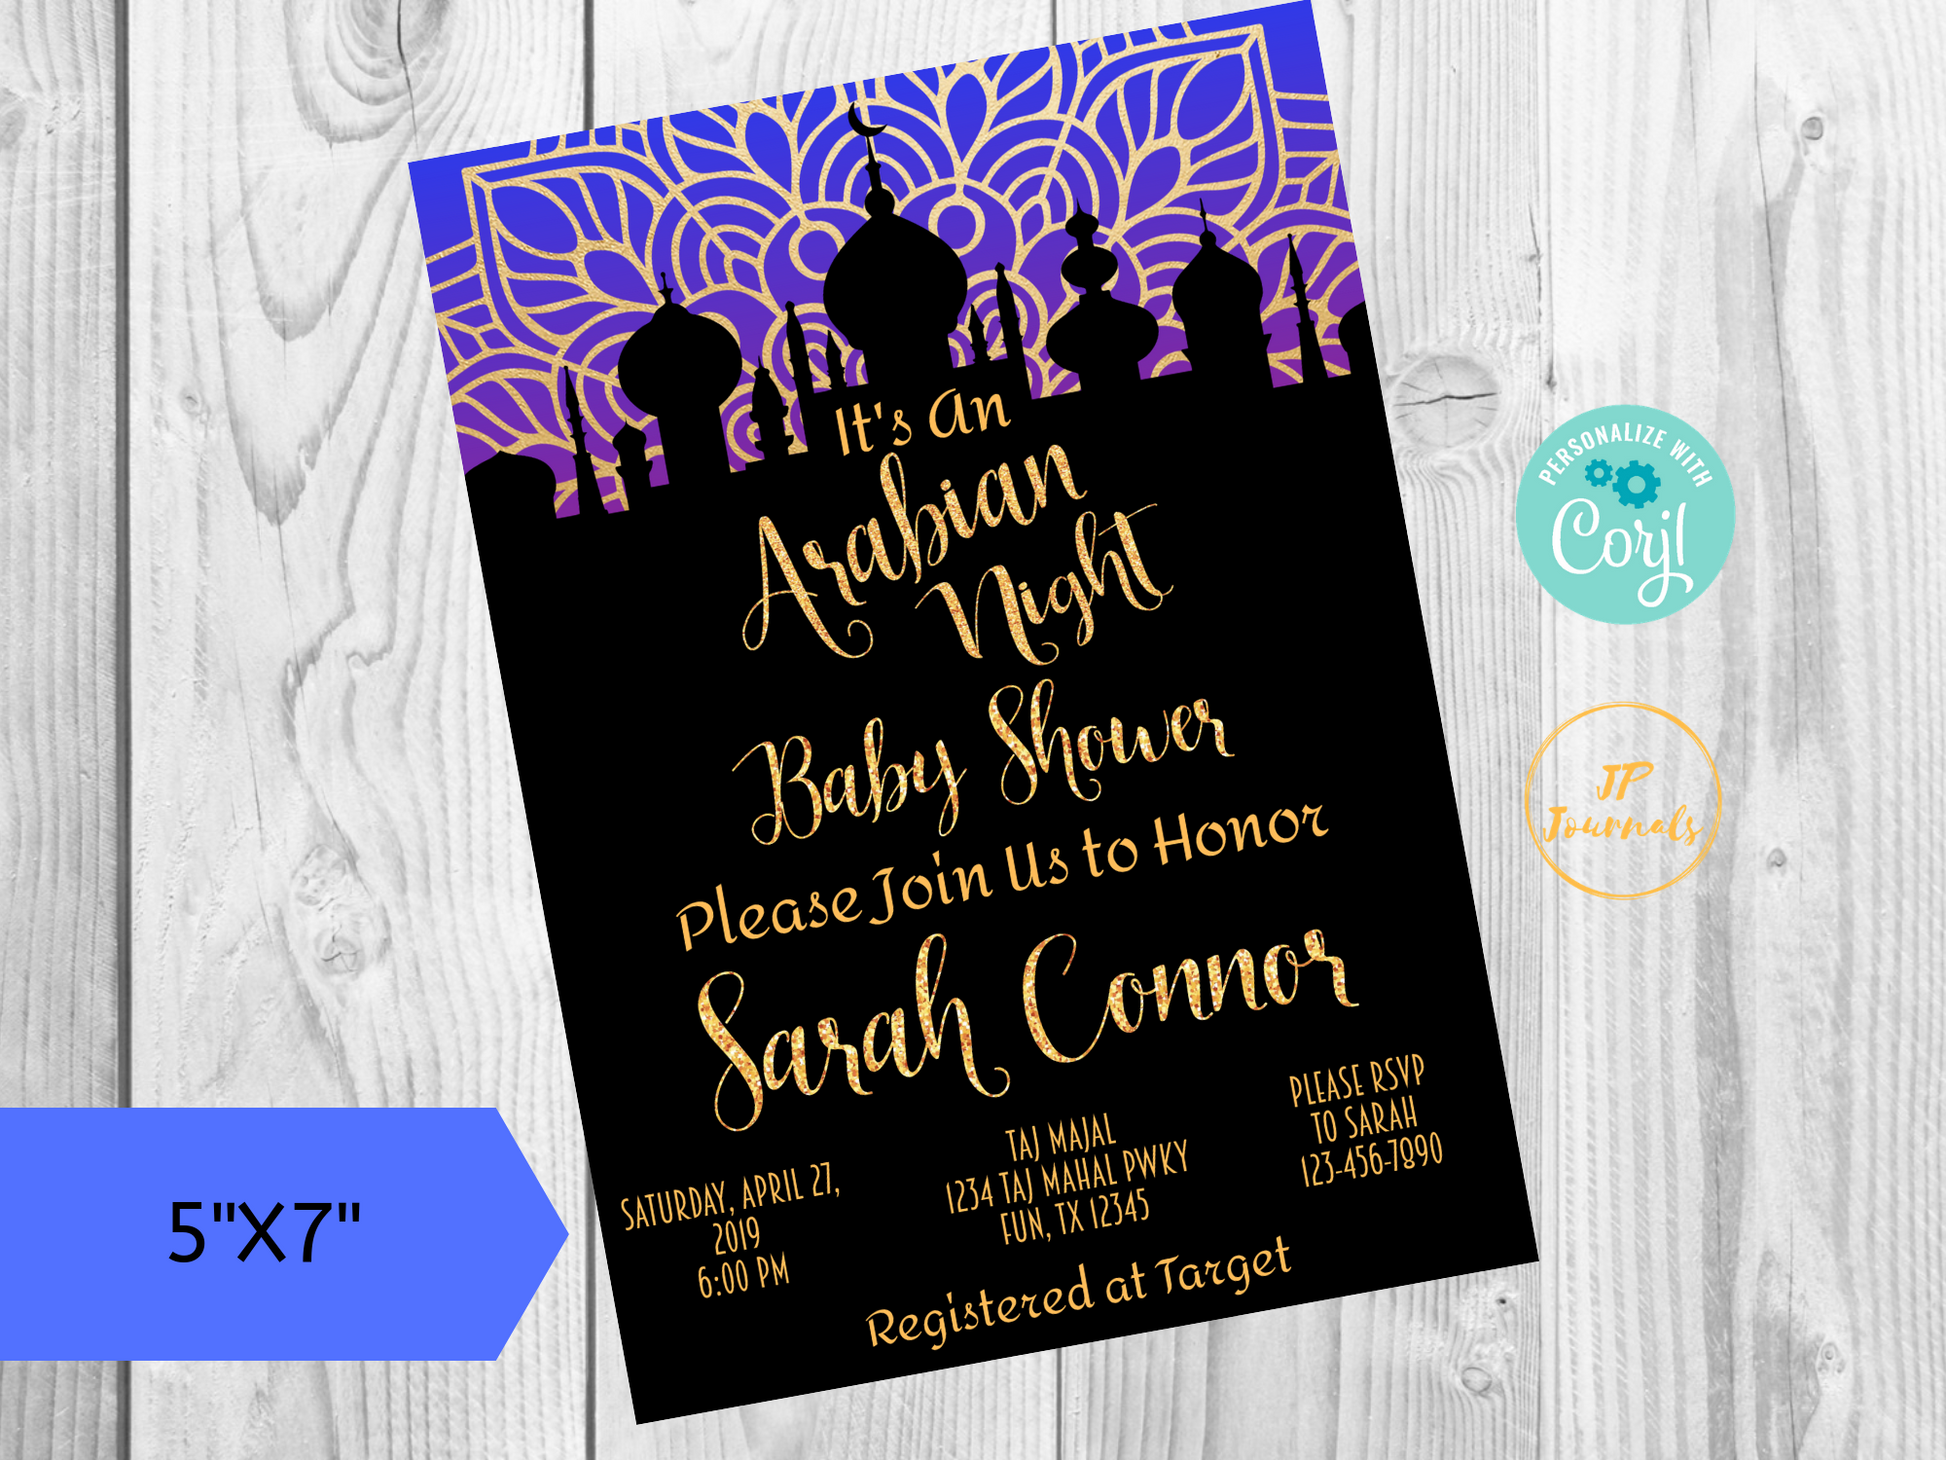 Arabian Night Baby Shower Invitation Printable